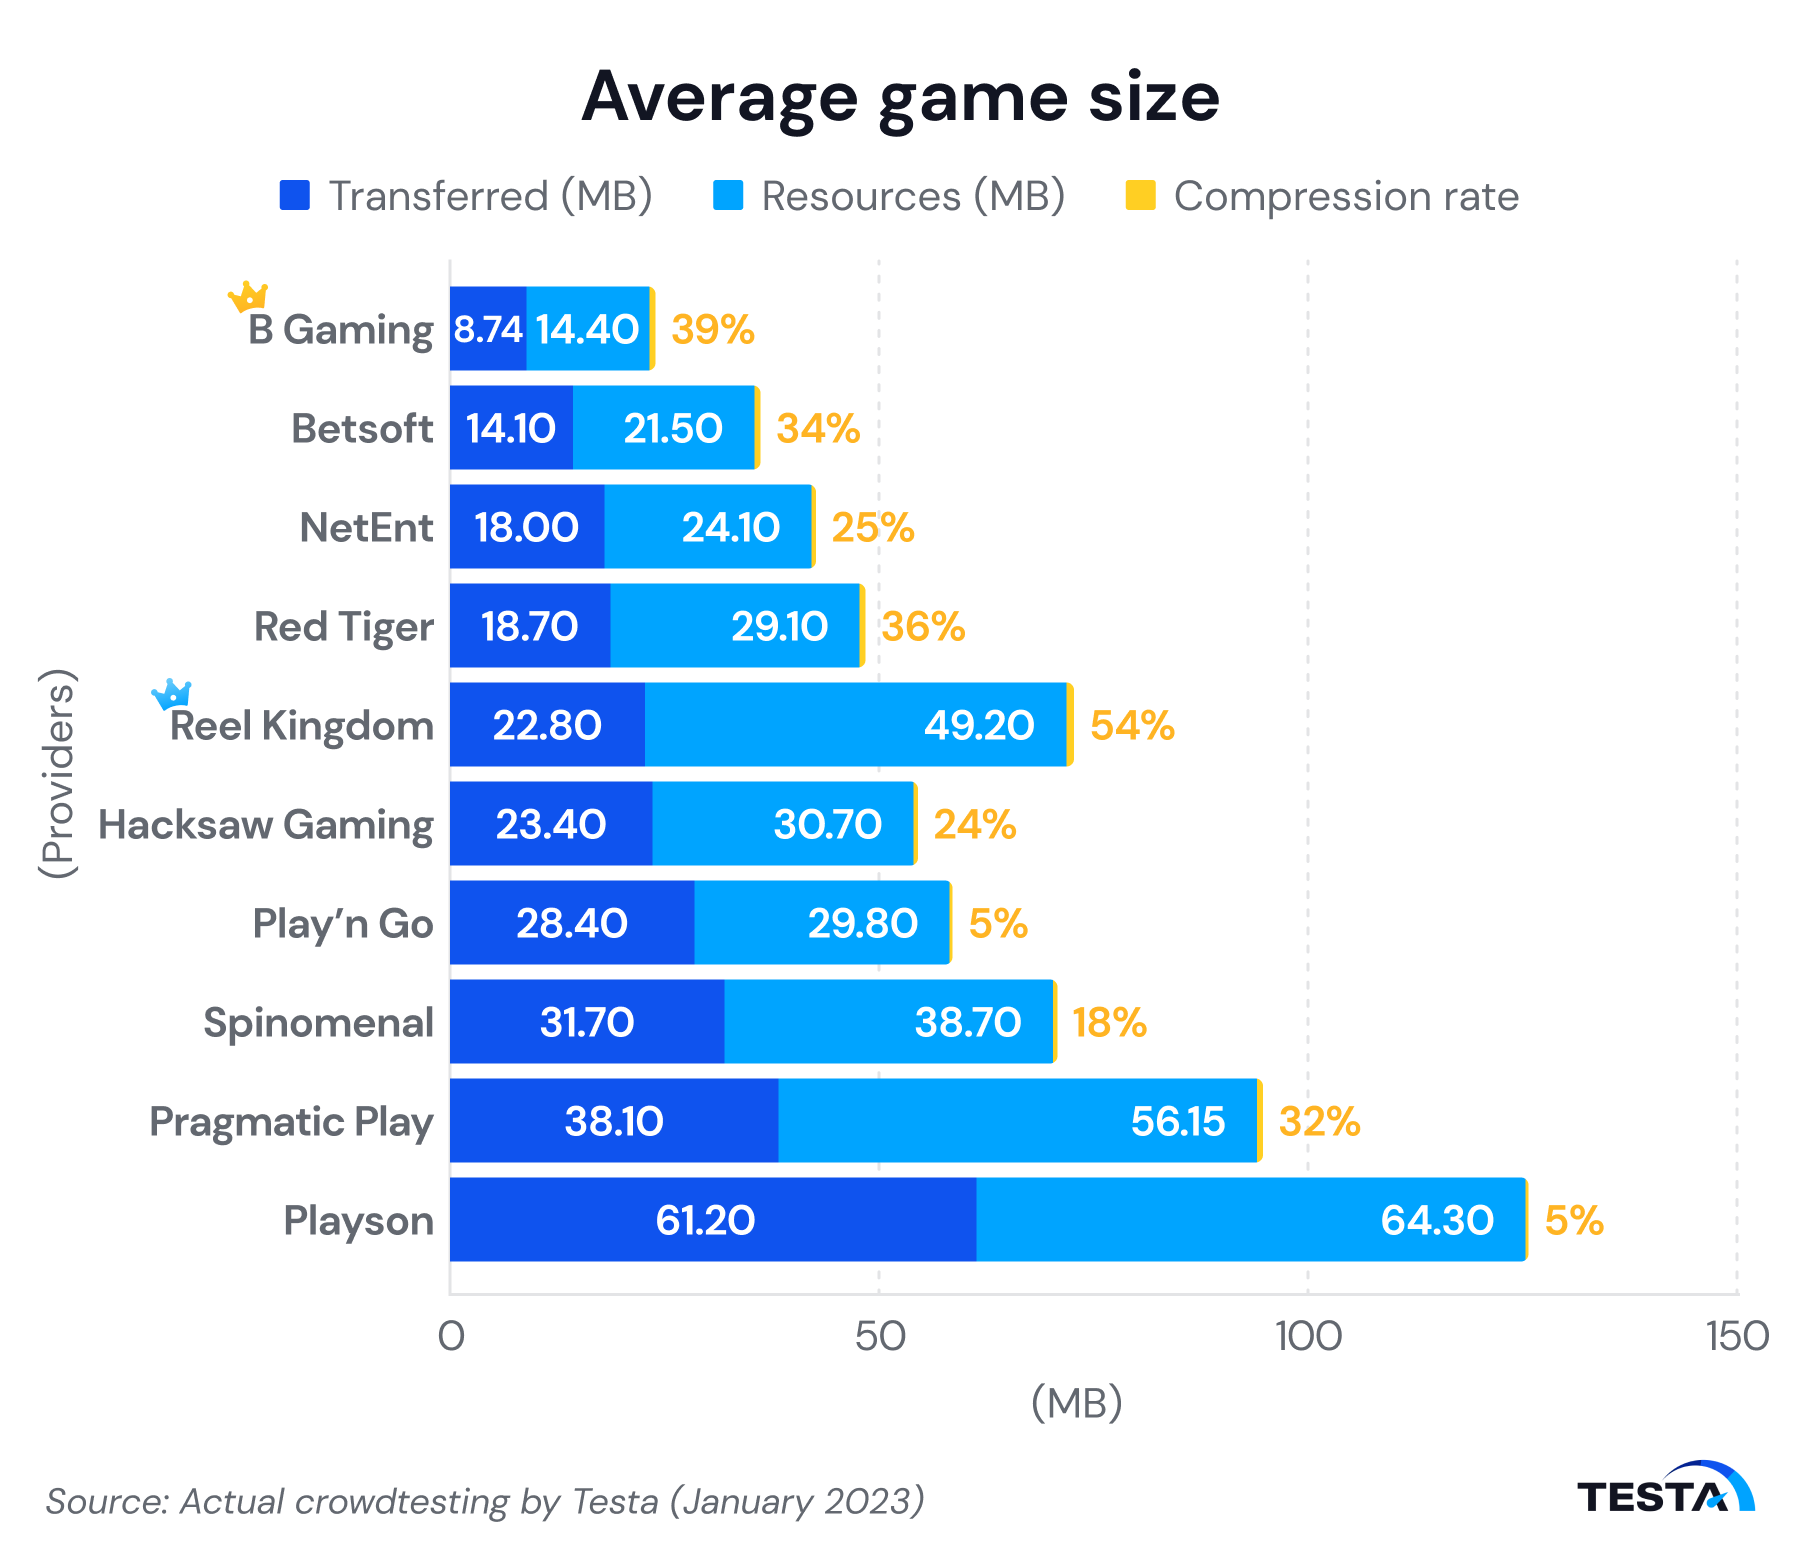 India’s iGaming providers average game size